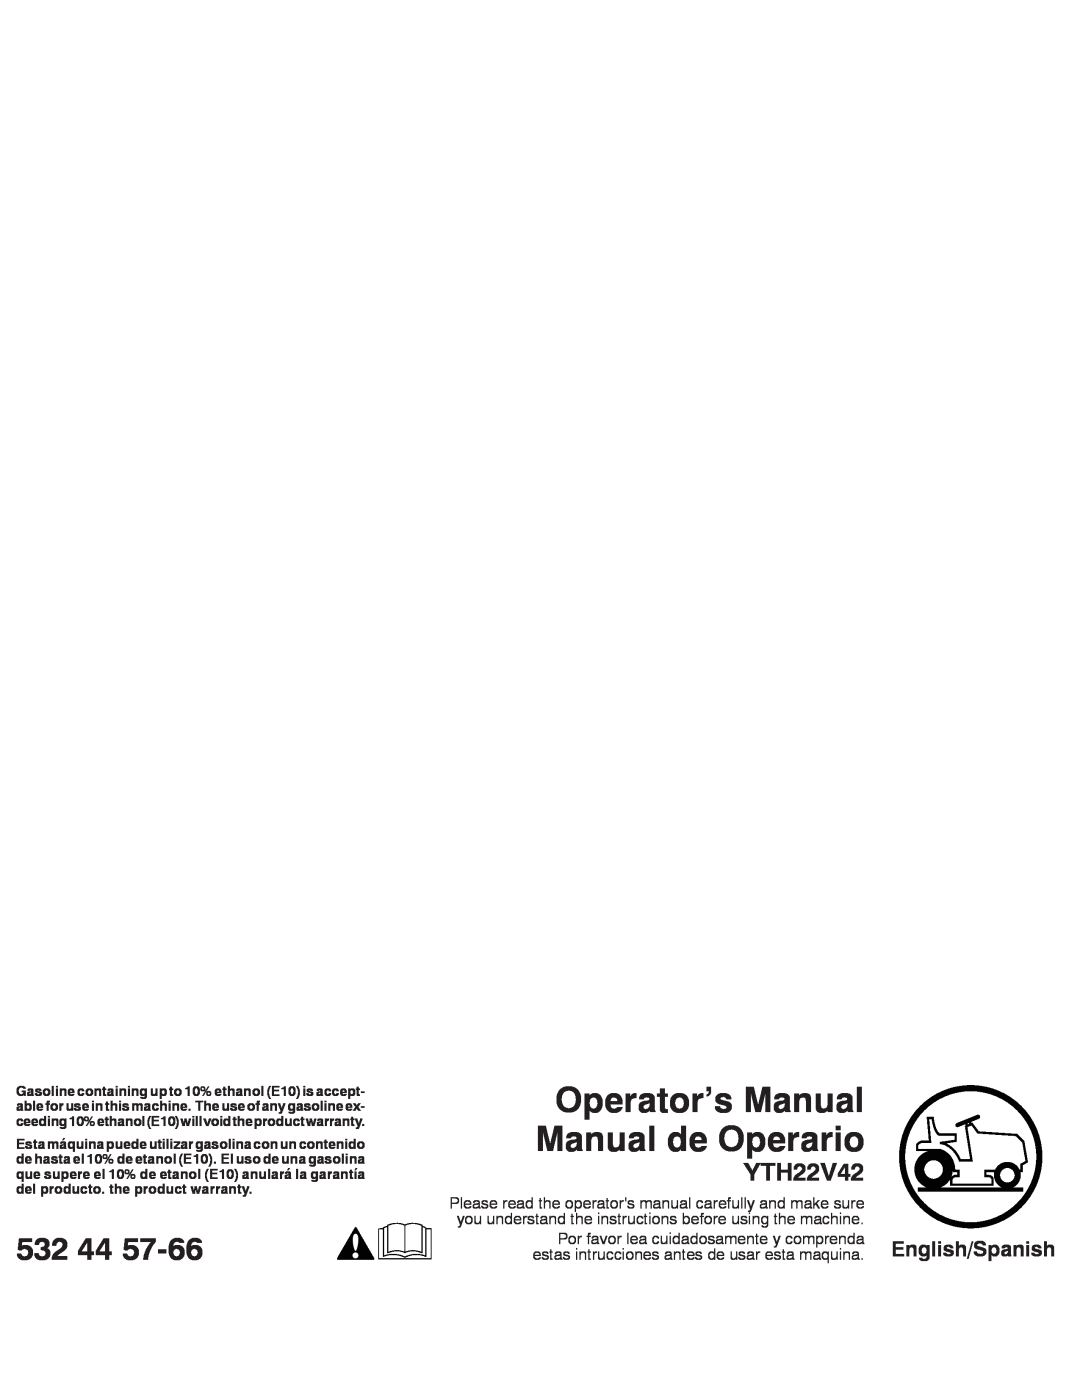 Husqvarna YTH22V42 warranty 532 44, English/Spanish, Operator’s Manual Manual de Operario 